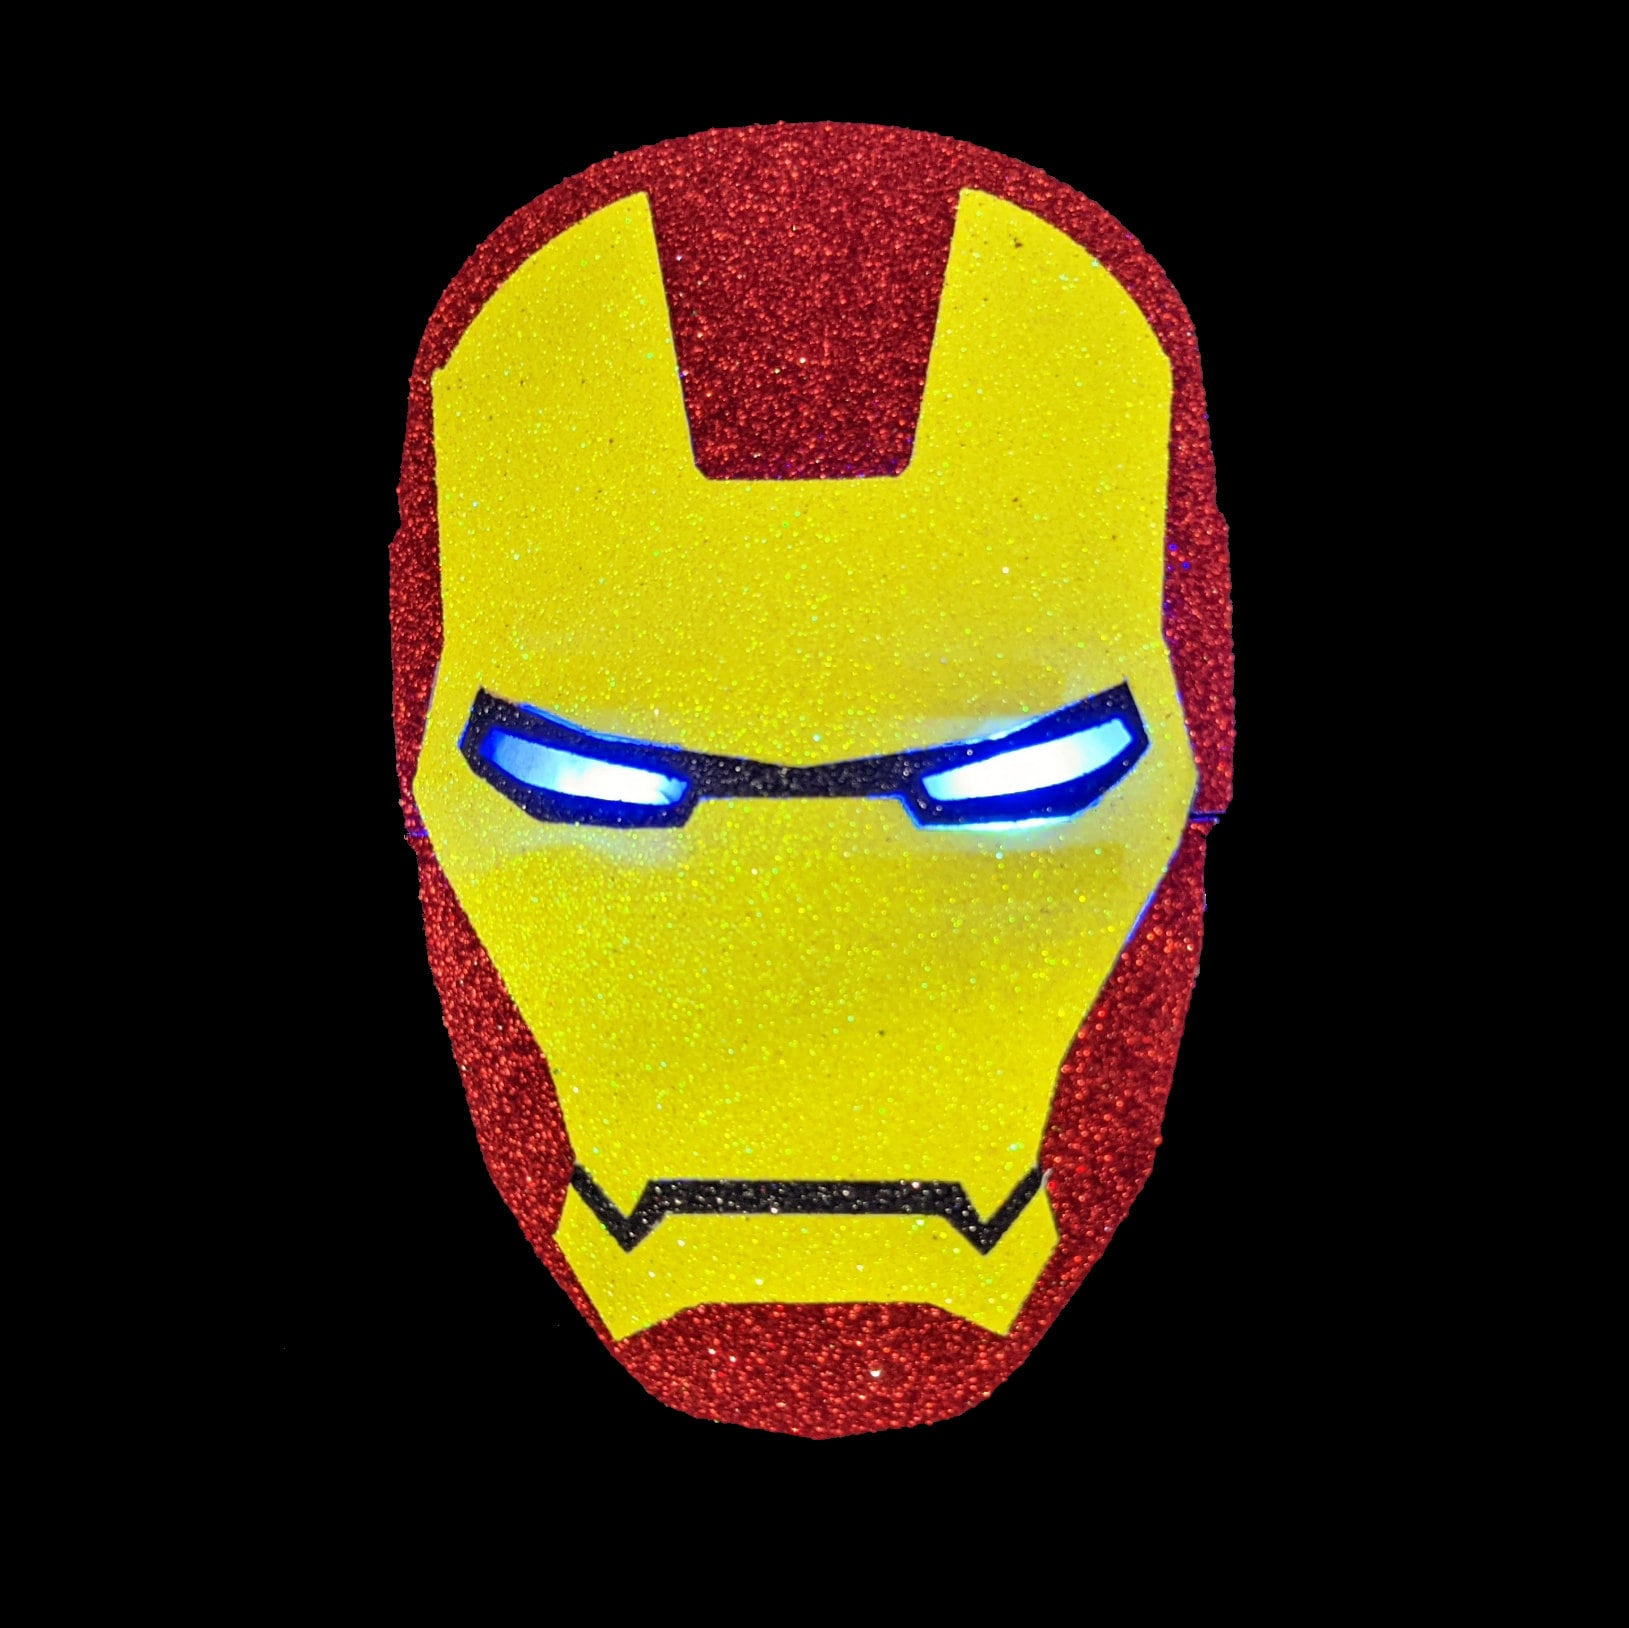 Iron Man Logo Wallpapers - Wallpaper Cave